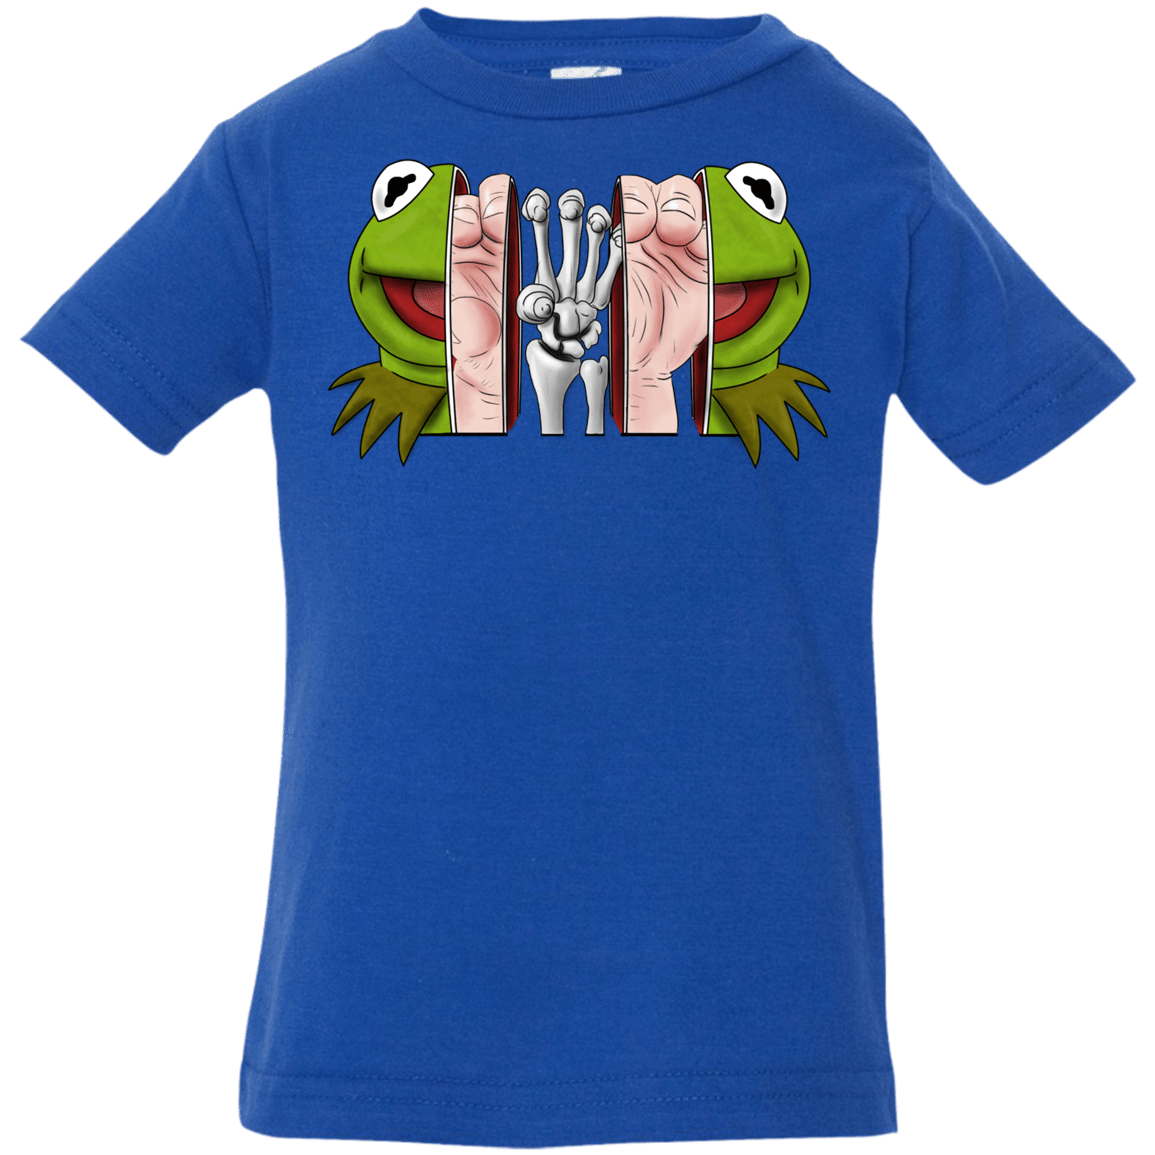 T-Shirts Royal / 6 Months Inside the Frog Infant Premium T-Shirt